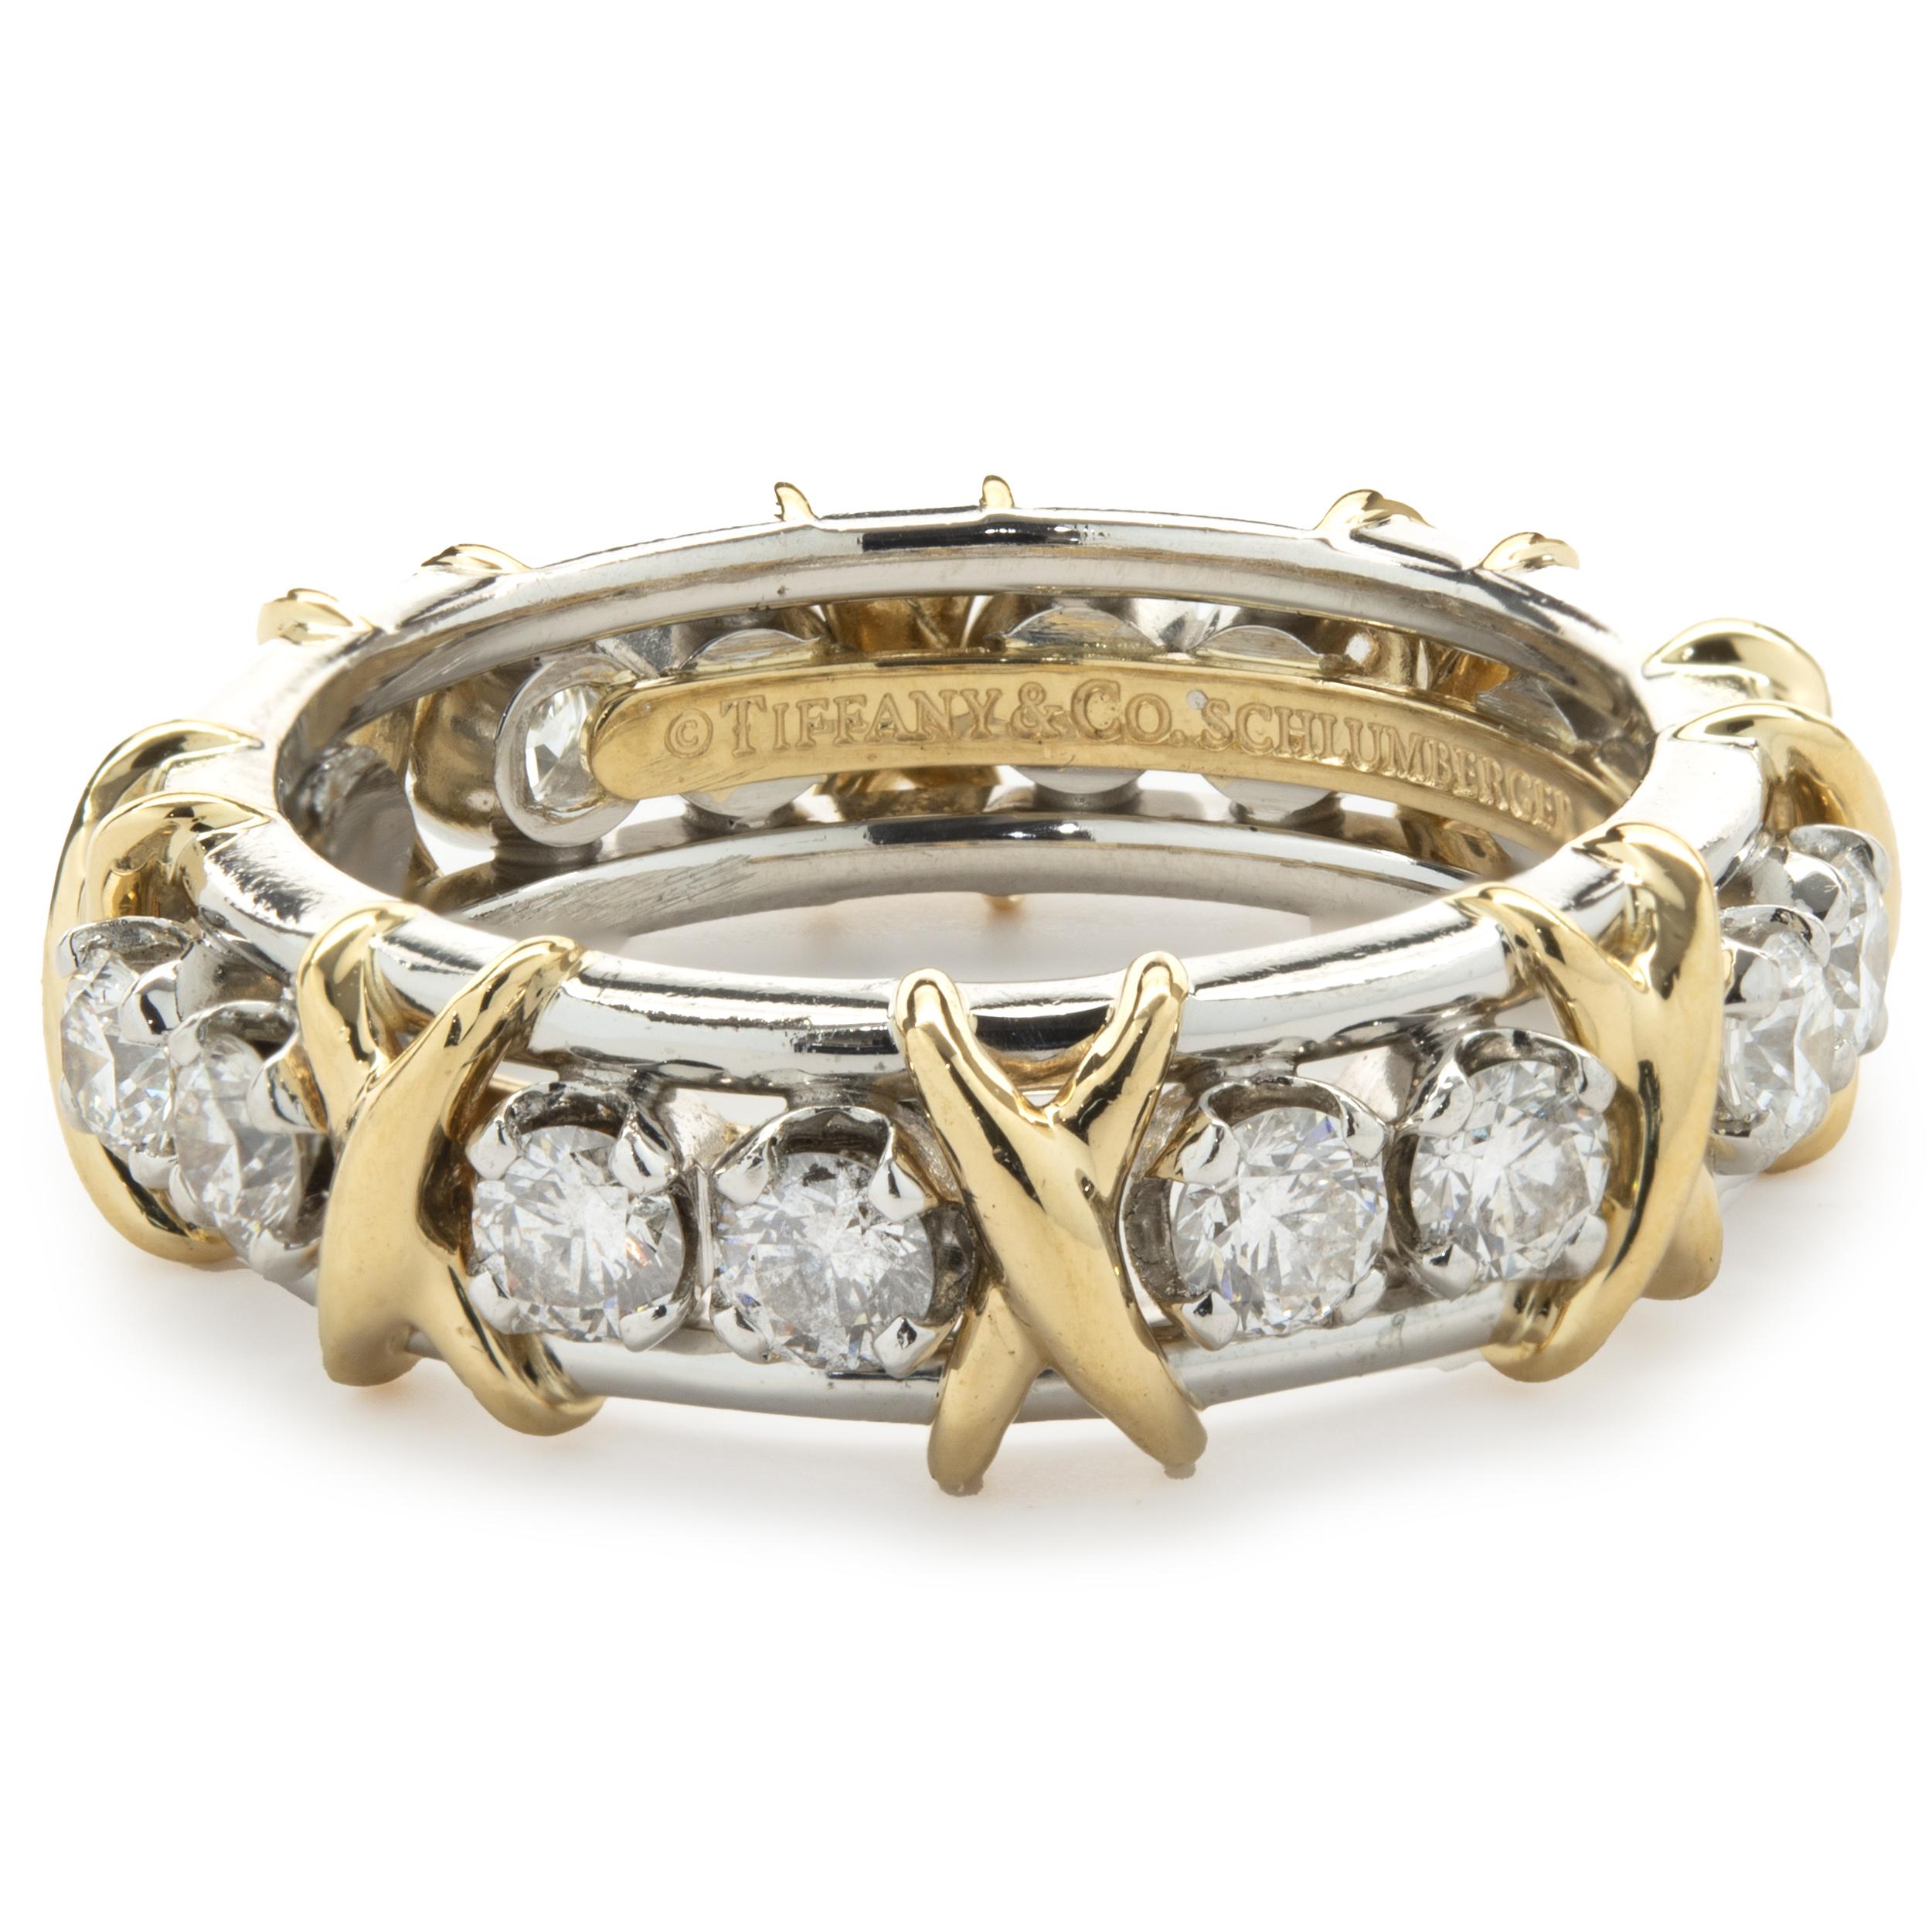 Tiffany & Co. Schulmberger Platinum and 18 Karat Yellow Gold Sixteen Diamond X B